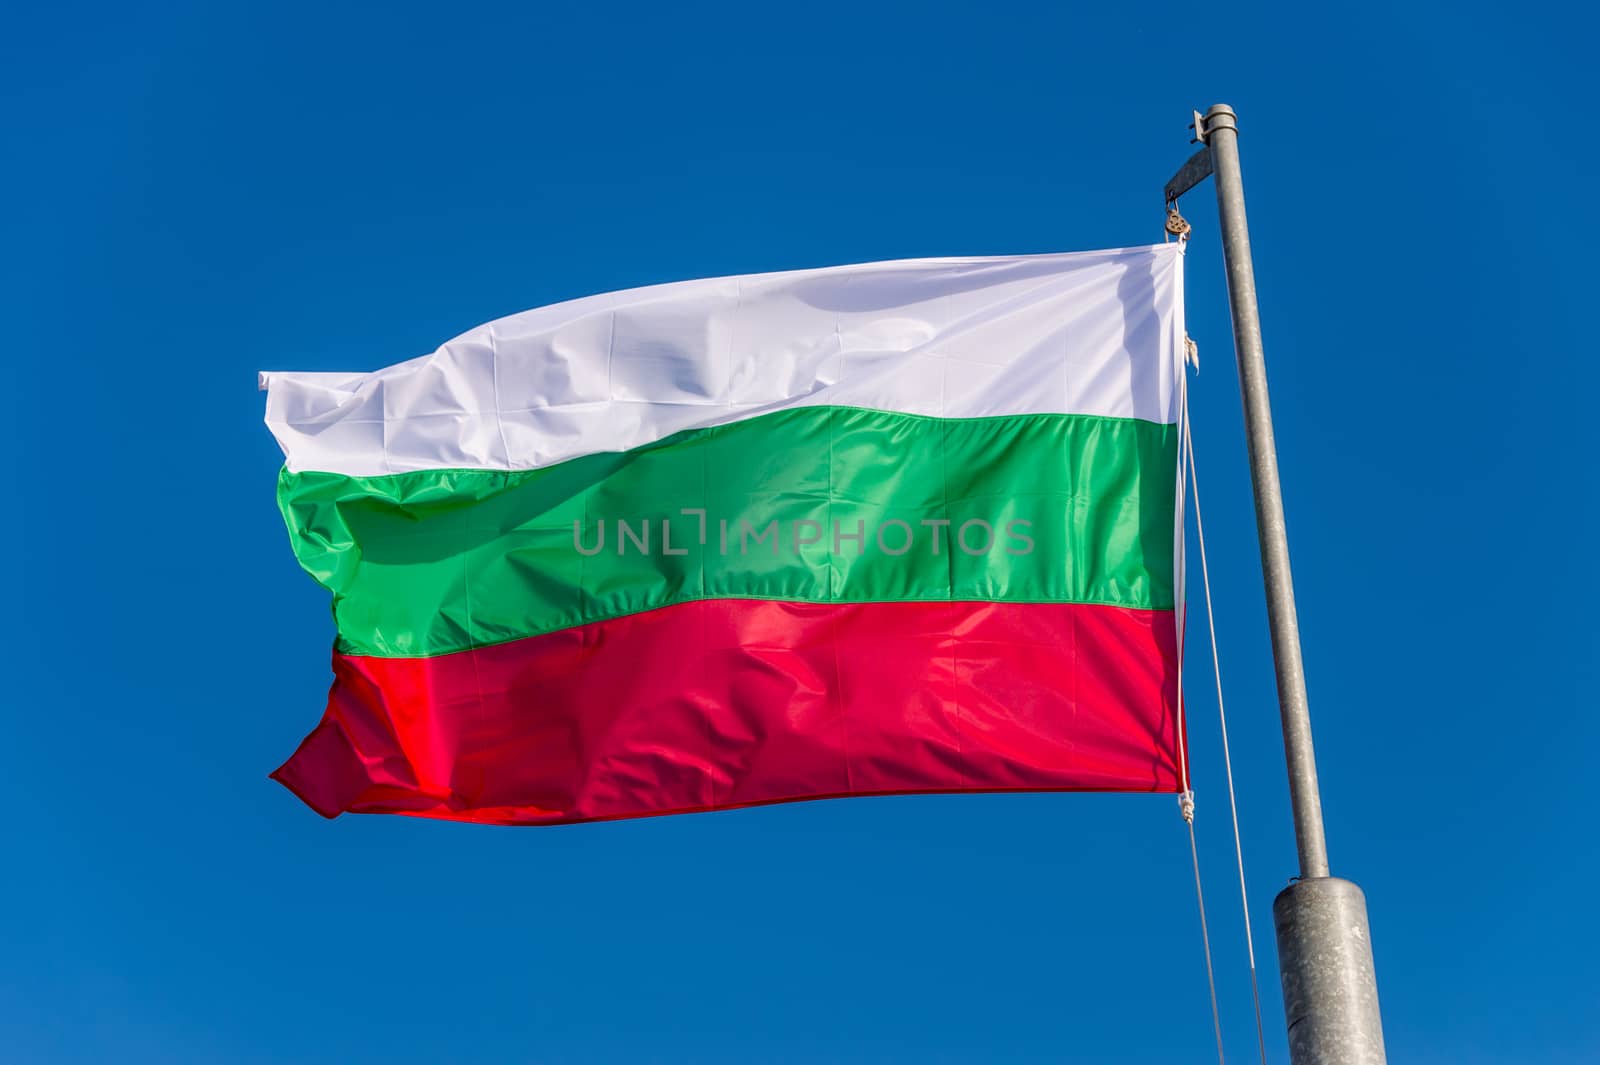 Bulgarian flag waving against blue sky in Boulogne sur Mer, Fran by mbruxelle